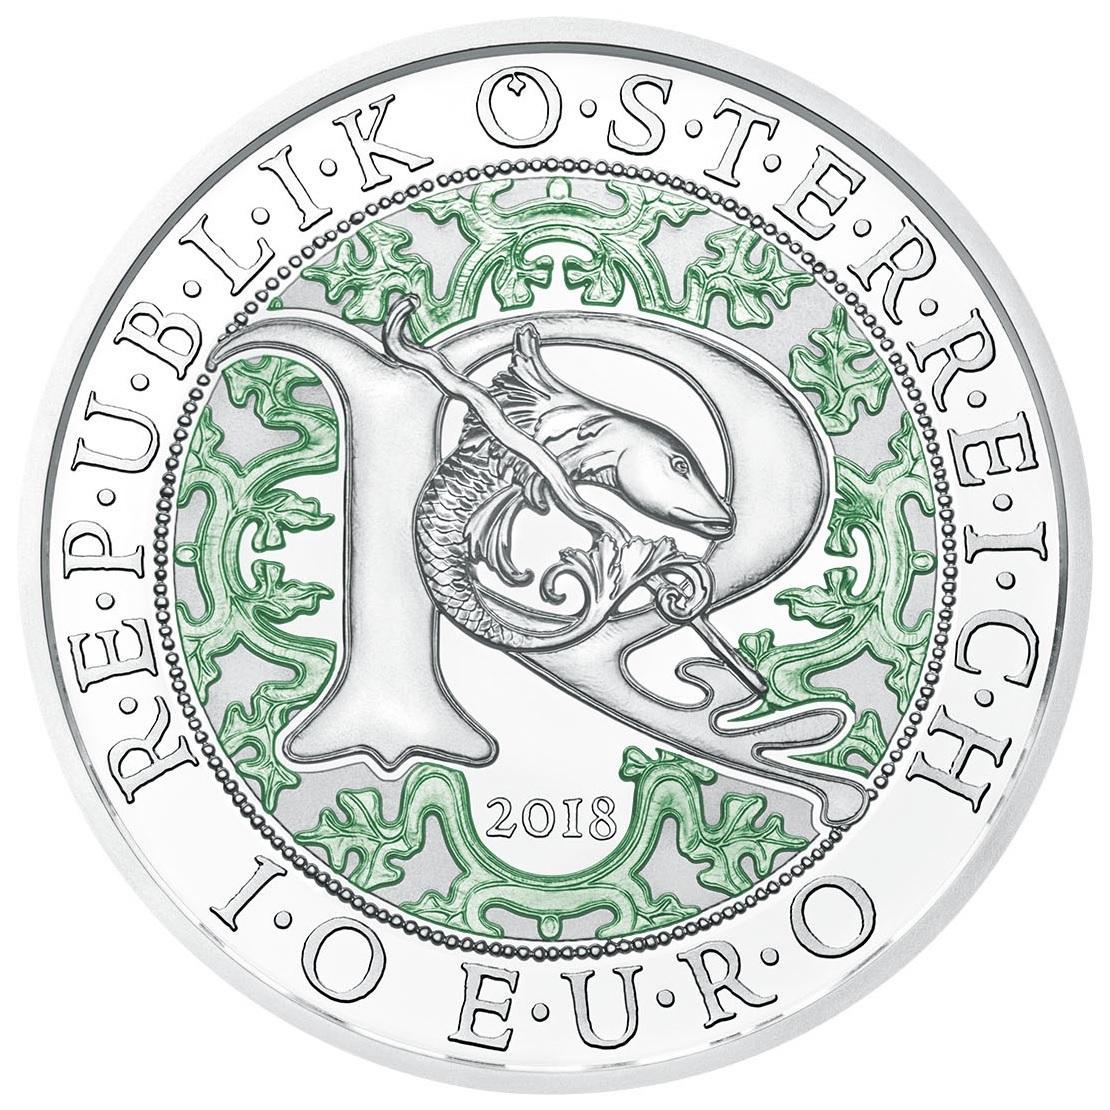 (EUR01.ComBU&BE.2018.22223) 10 euro Austria 2018 Proof silver - Raphael, the Healing angel Obverse (zoom)